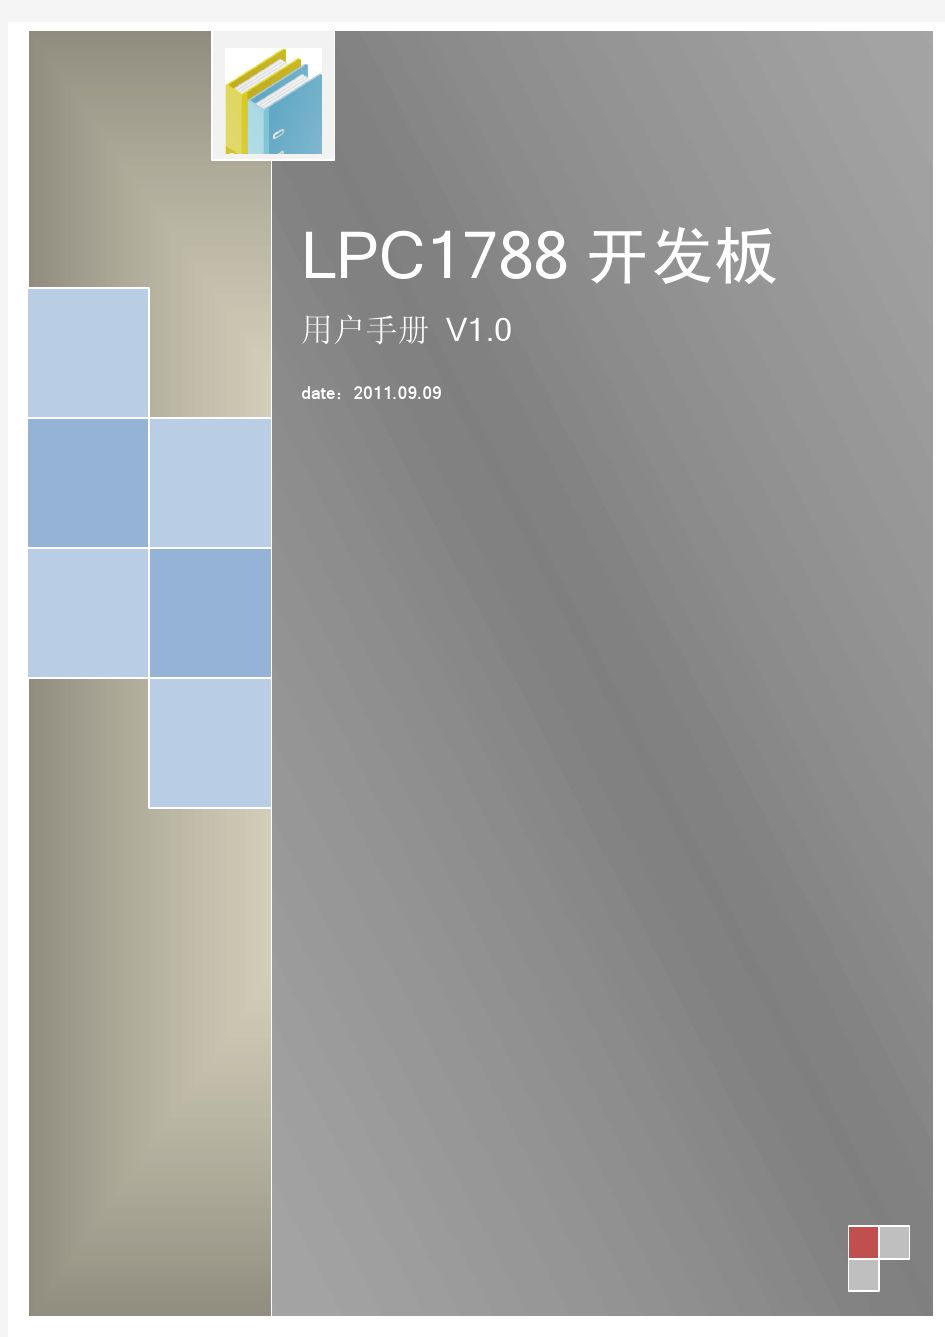 LPC1788官方开发板用户手册